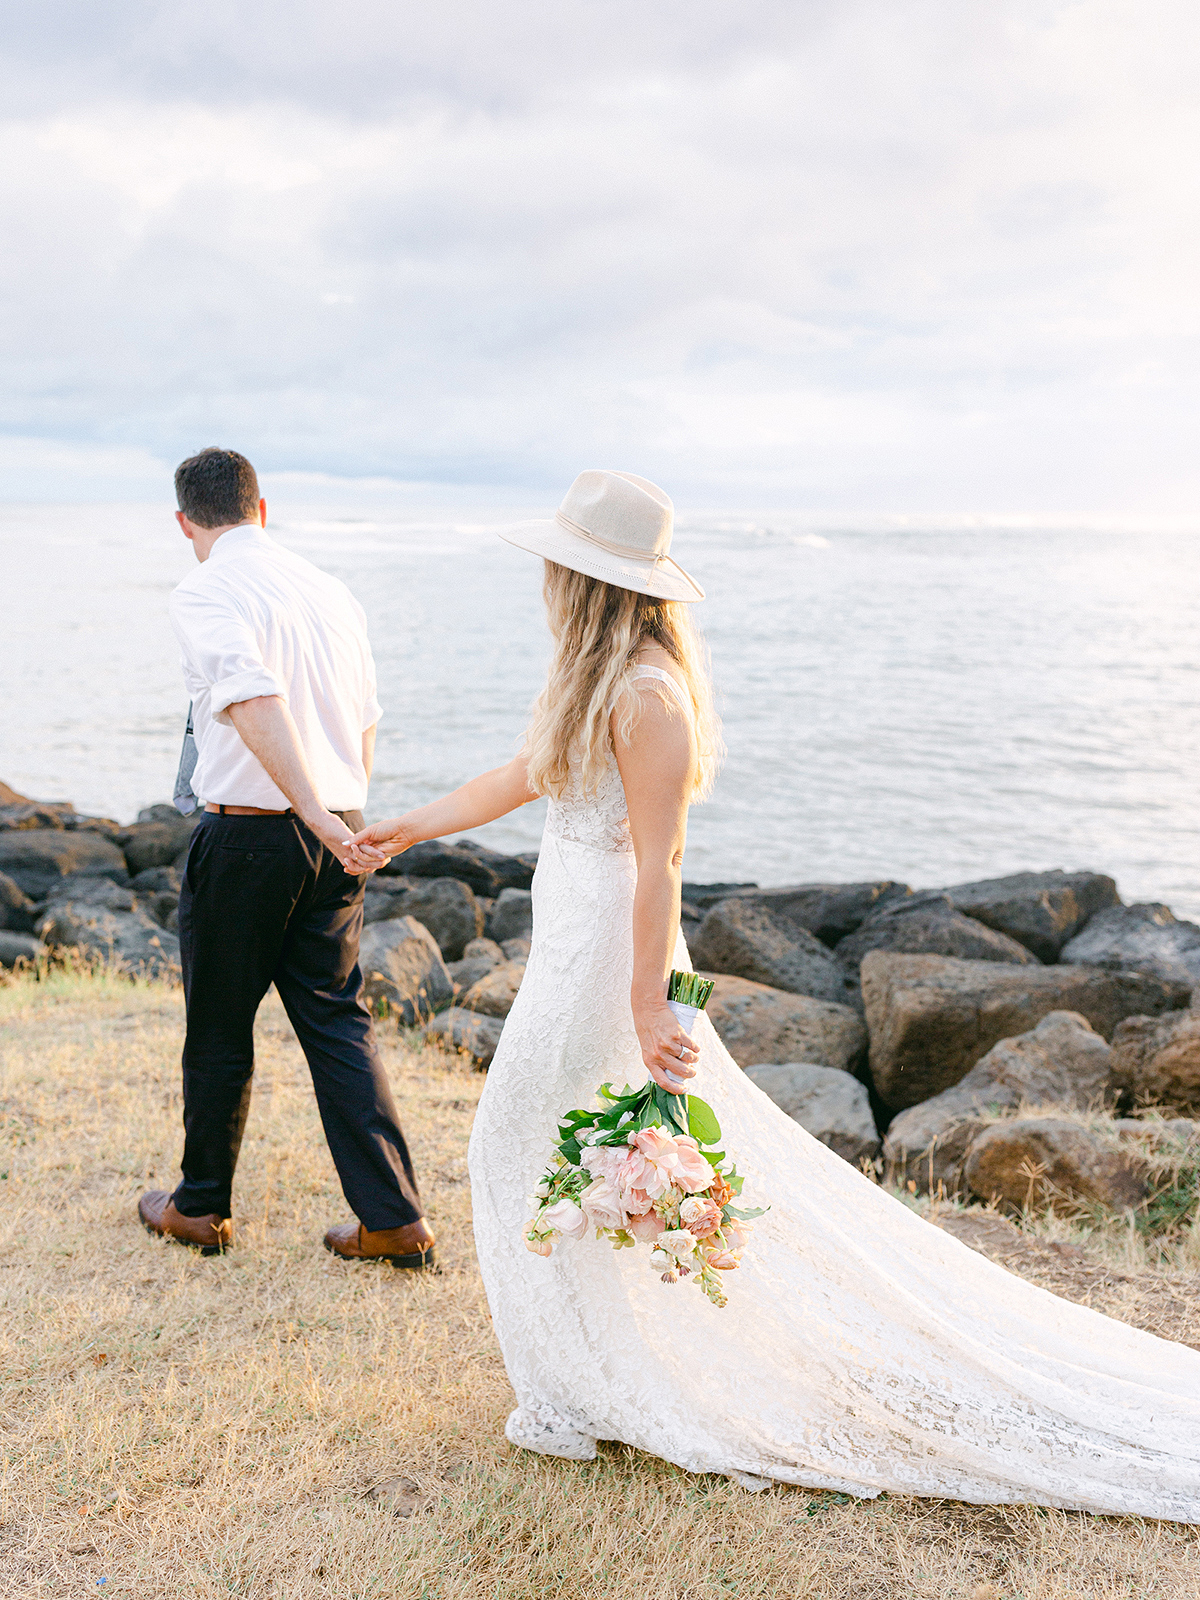 Destination elopement in Hawaii